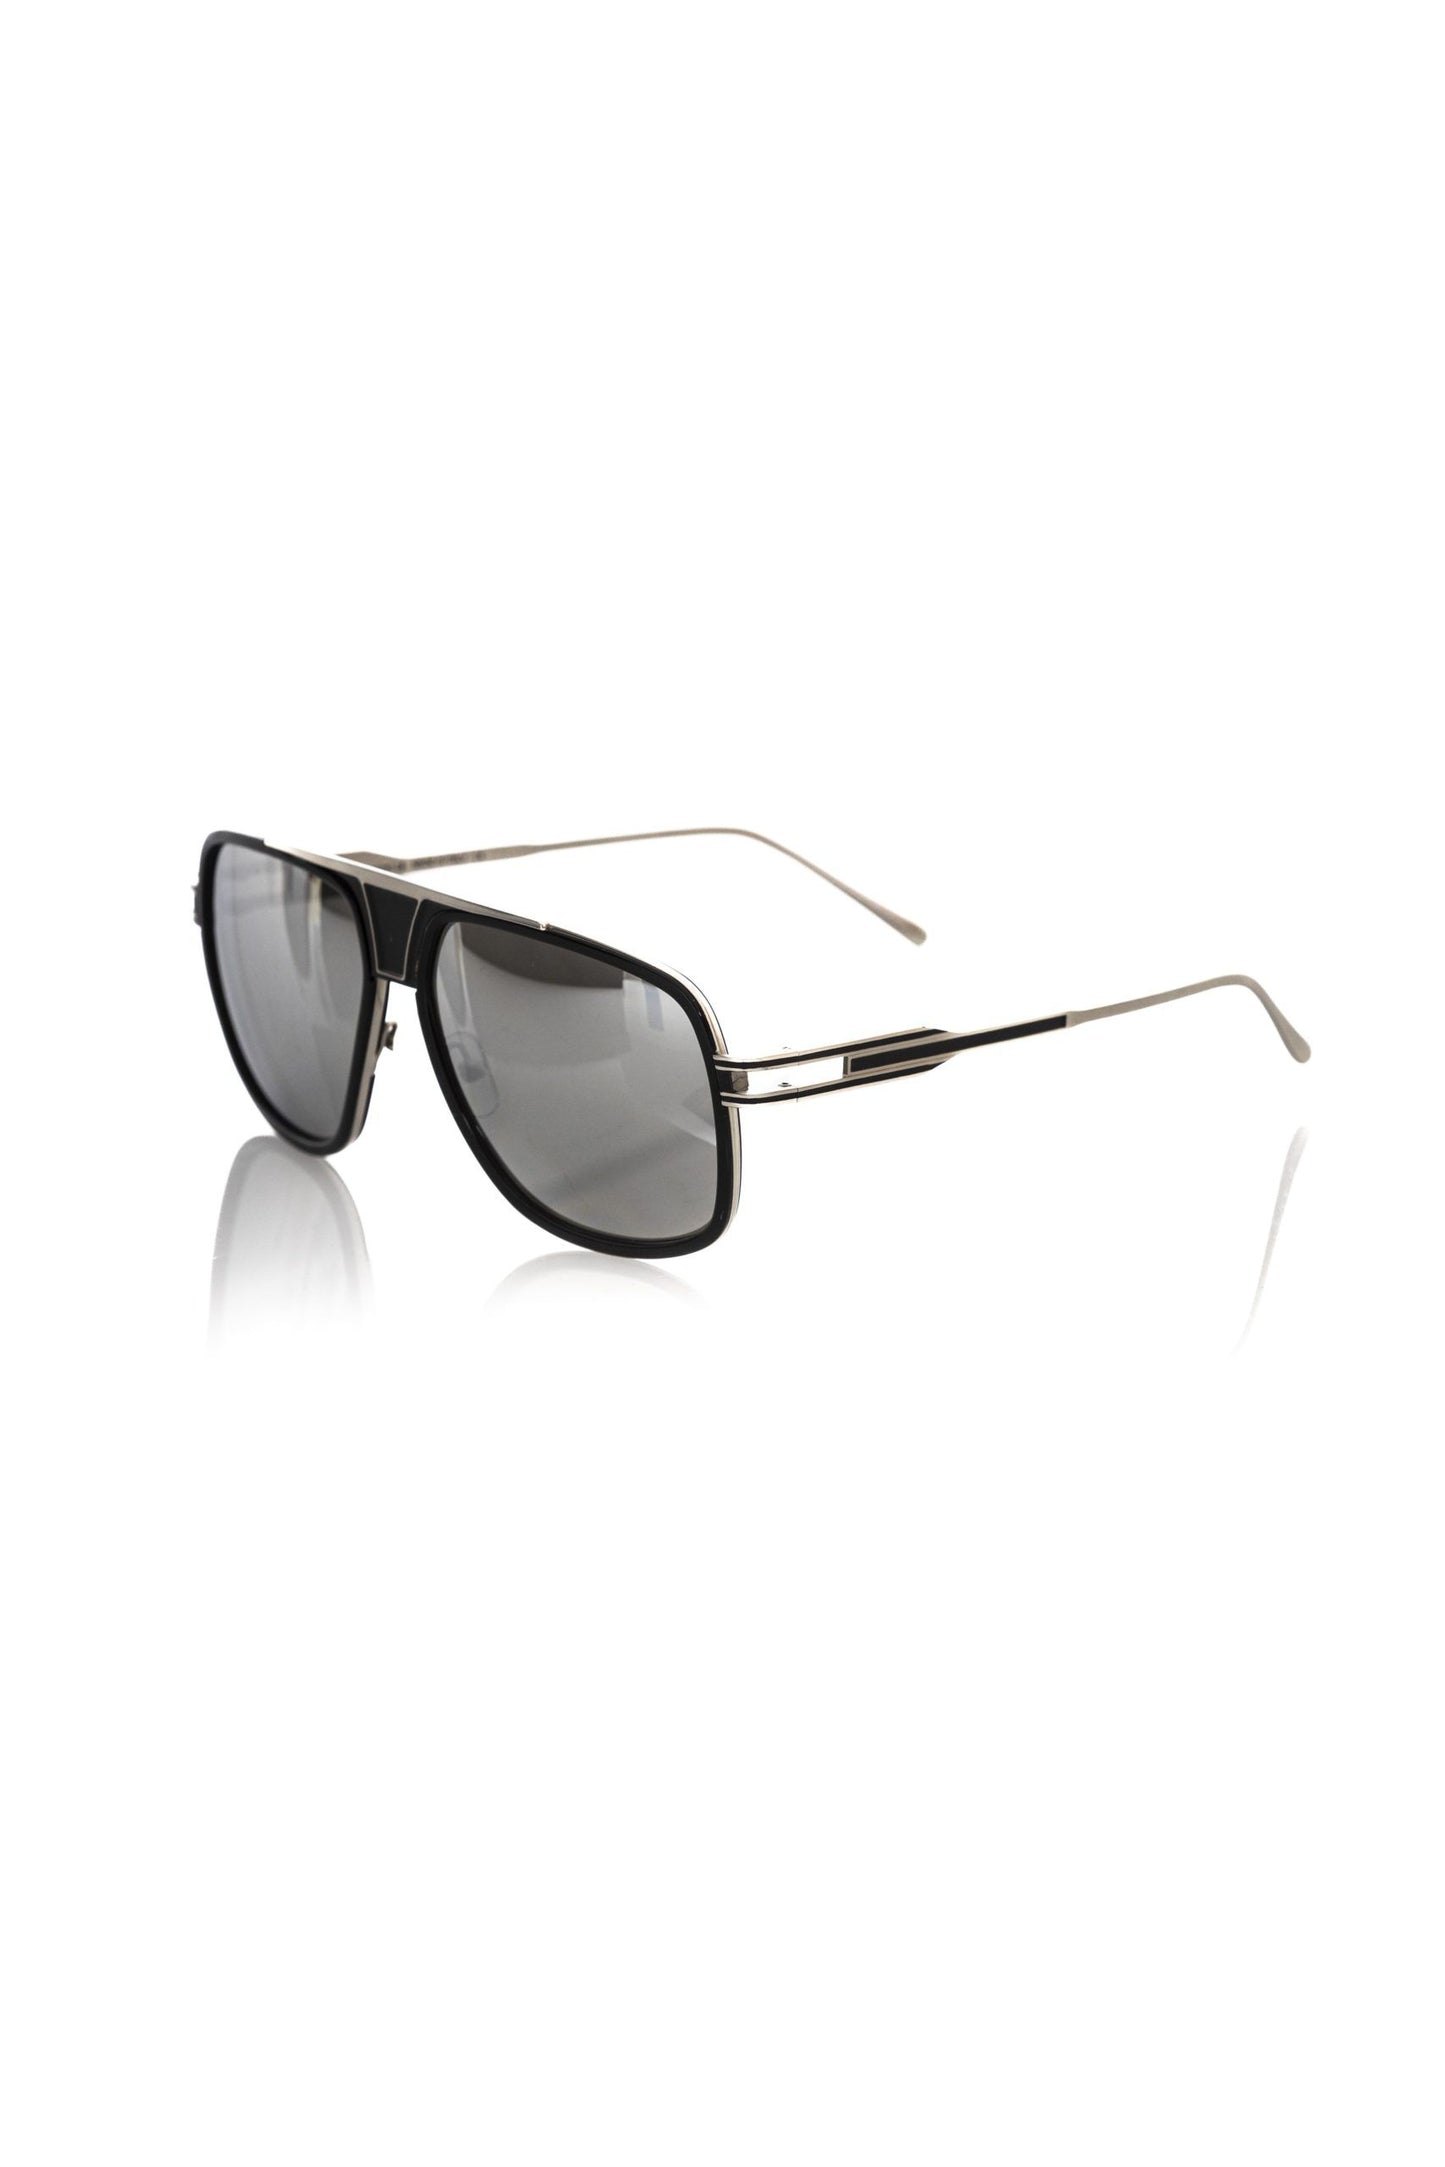 Frankie Morello Black Metallic Fibre Sunglasses for man